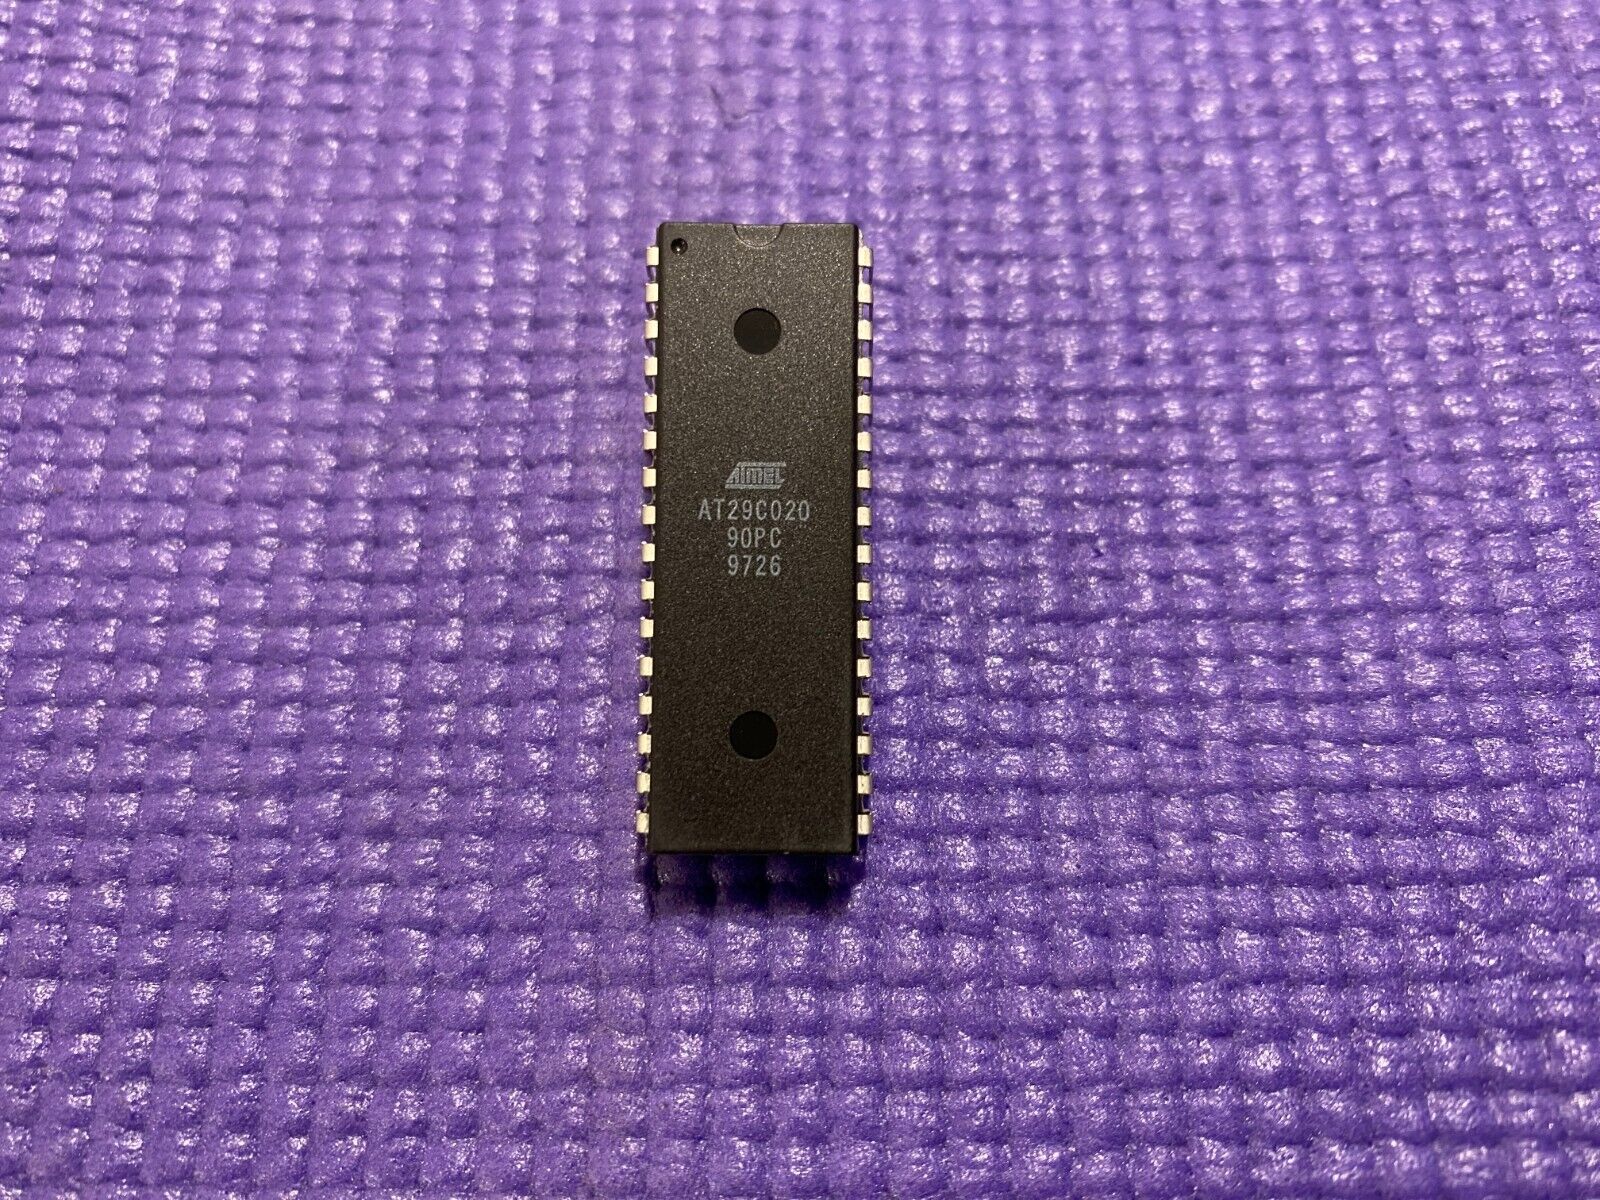 CMOS 32 pin DIP BIOS chip Atmel AT29C020-90PC (We can program it for free)